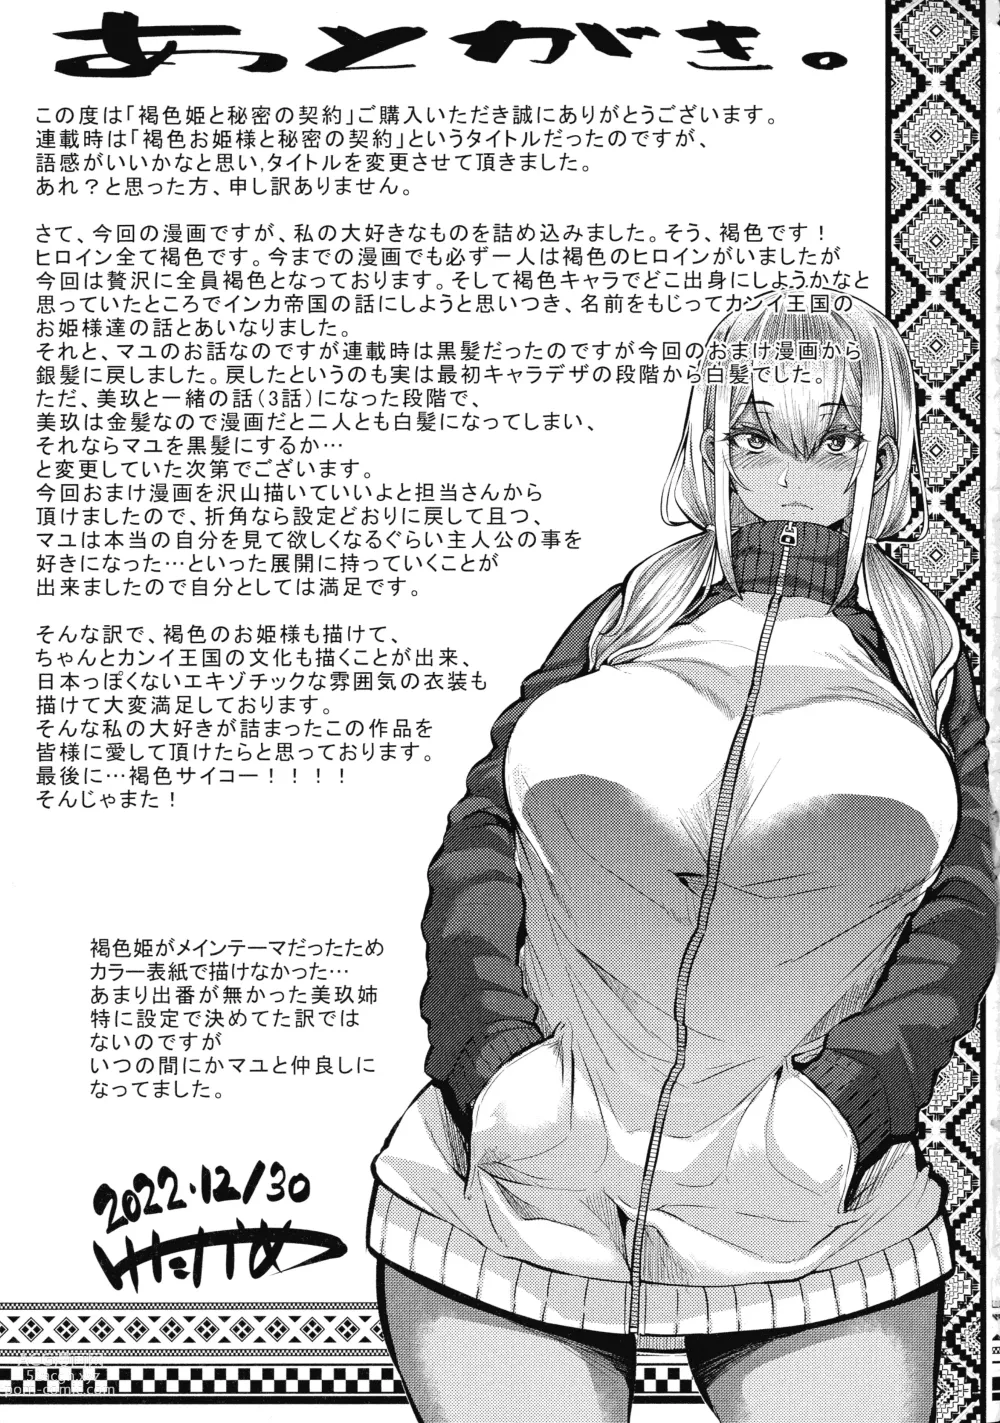 Page 205 of manga Kasshoku Hime to Himitsu no Keiyaku